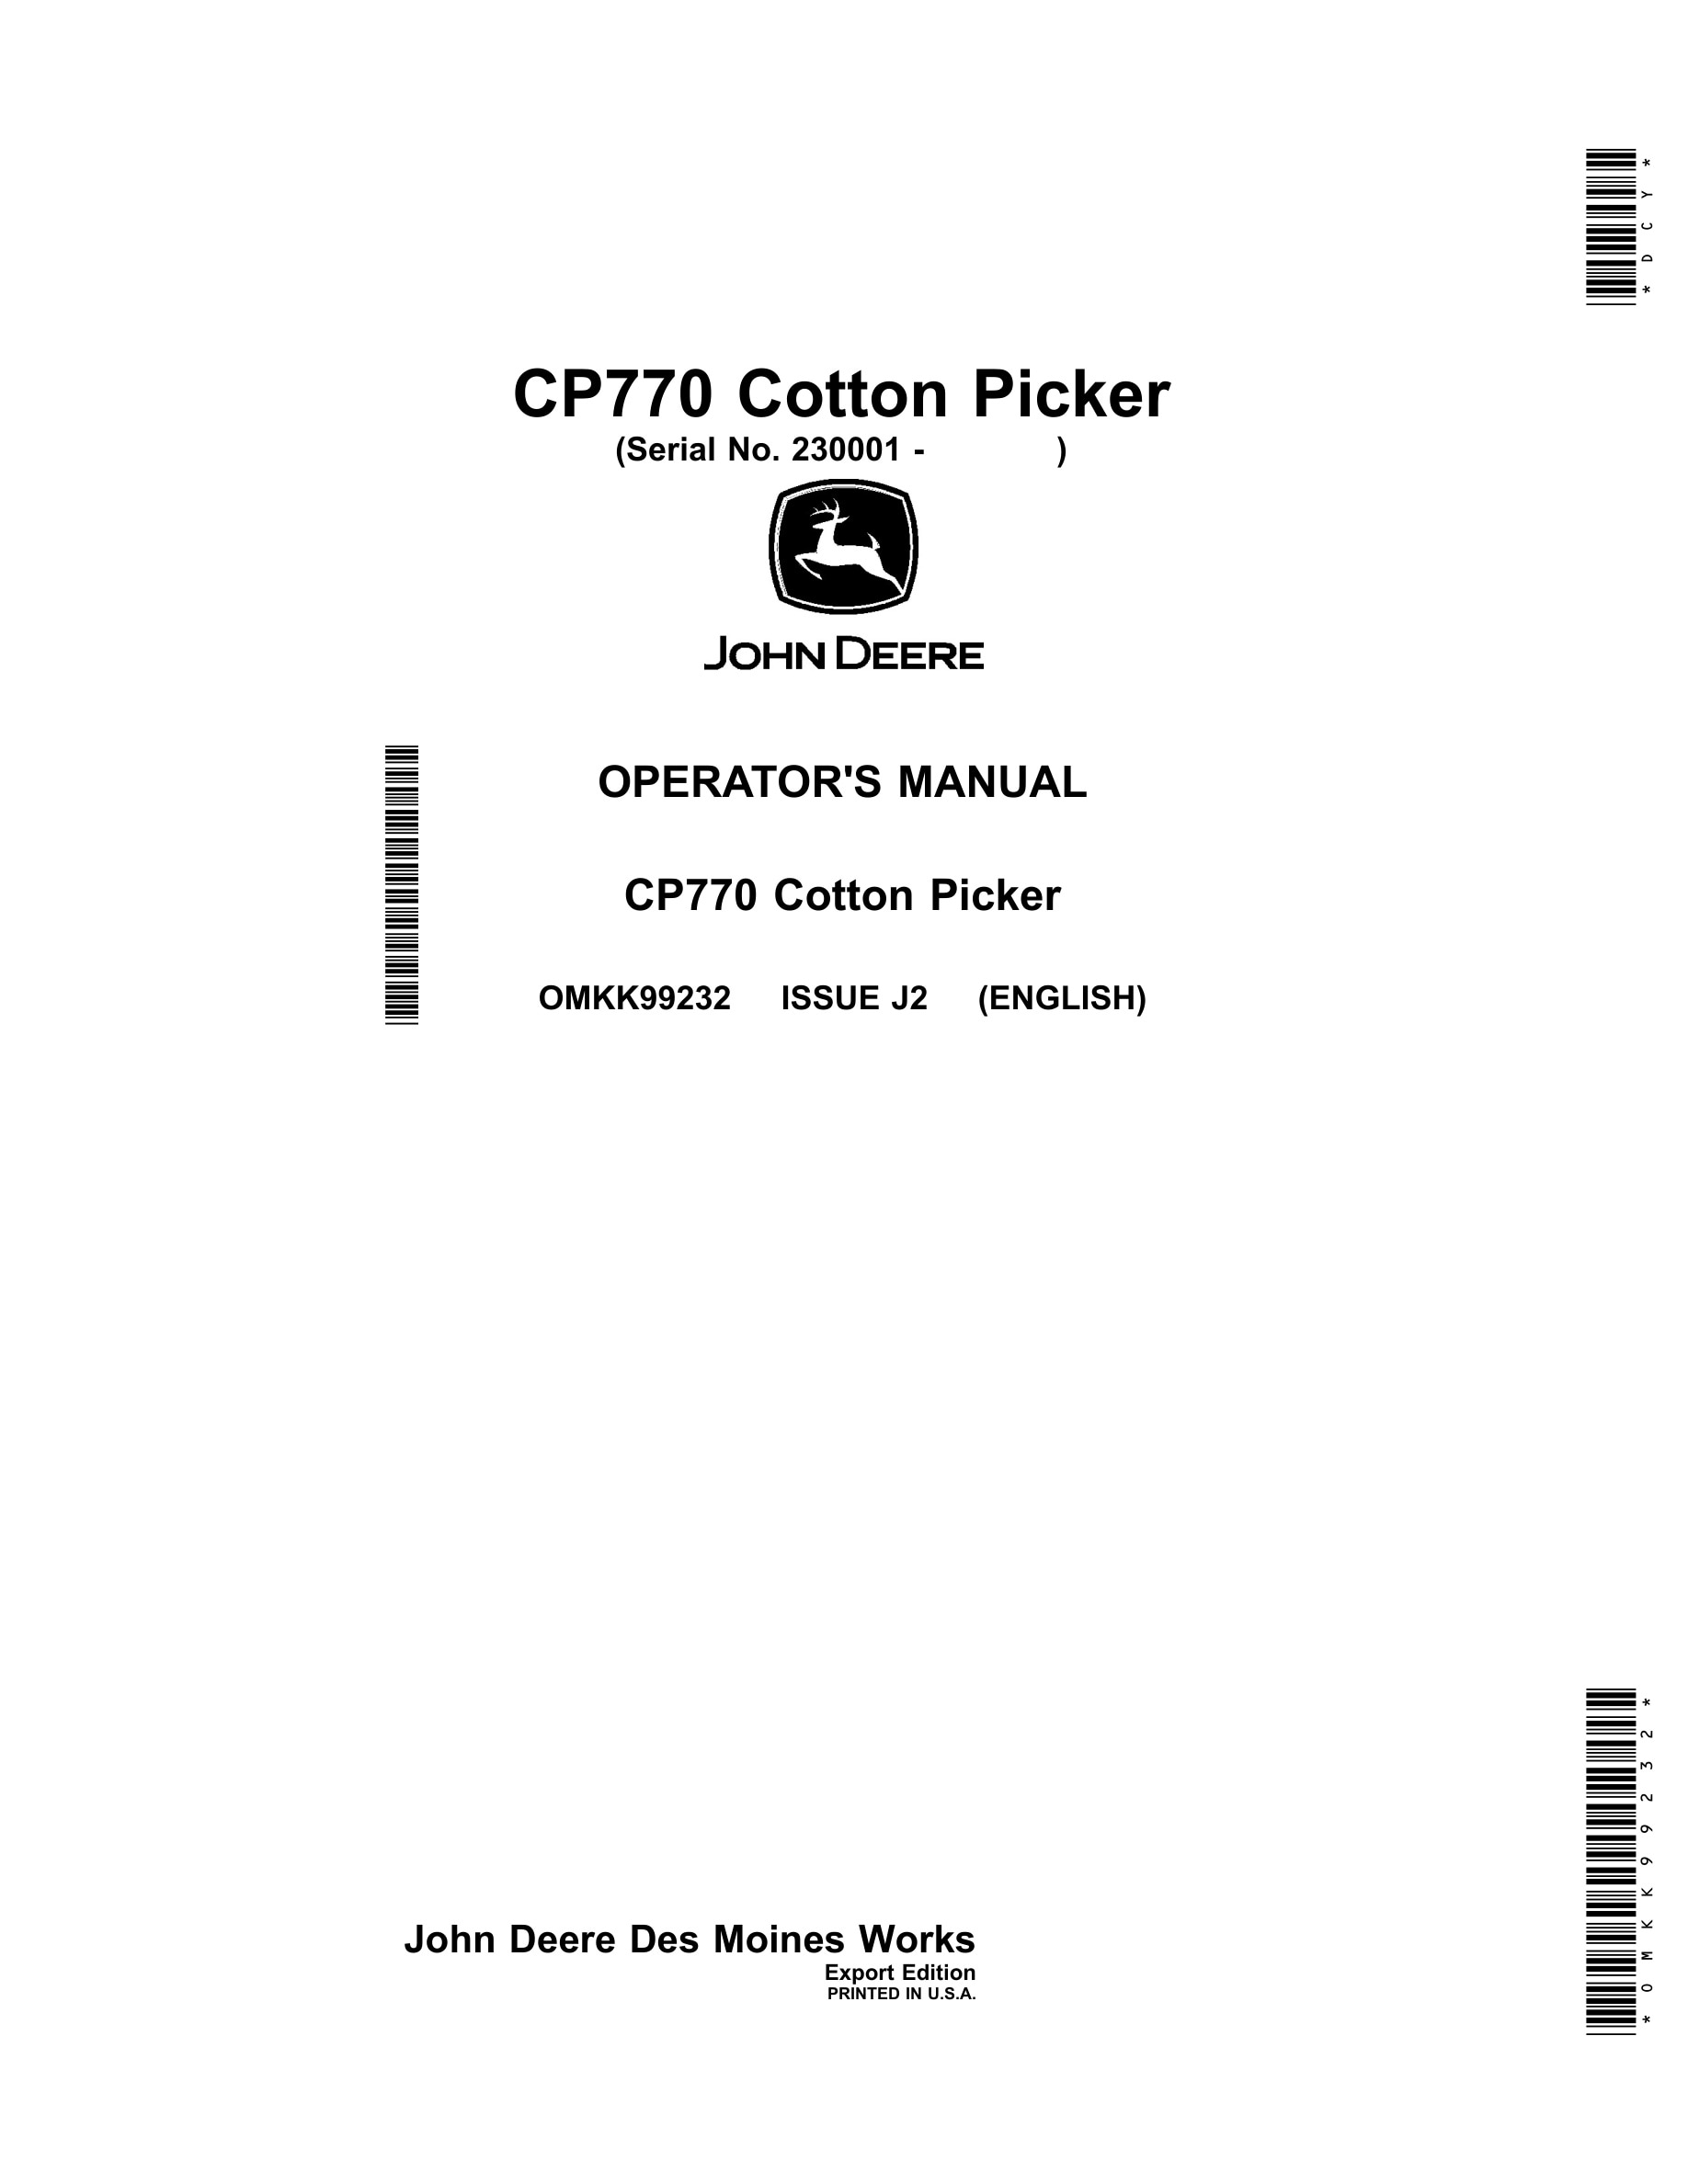 John Deere CP770 Cotton Picker Operator Manual OMKK99232-1